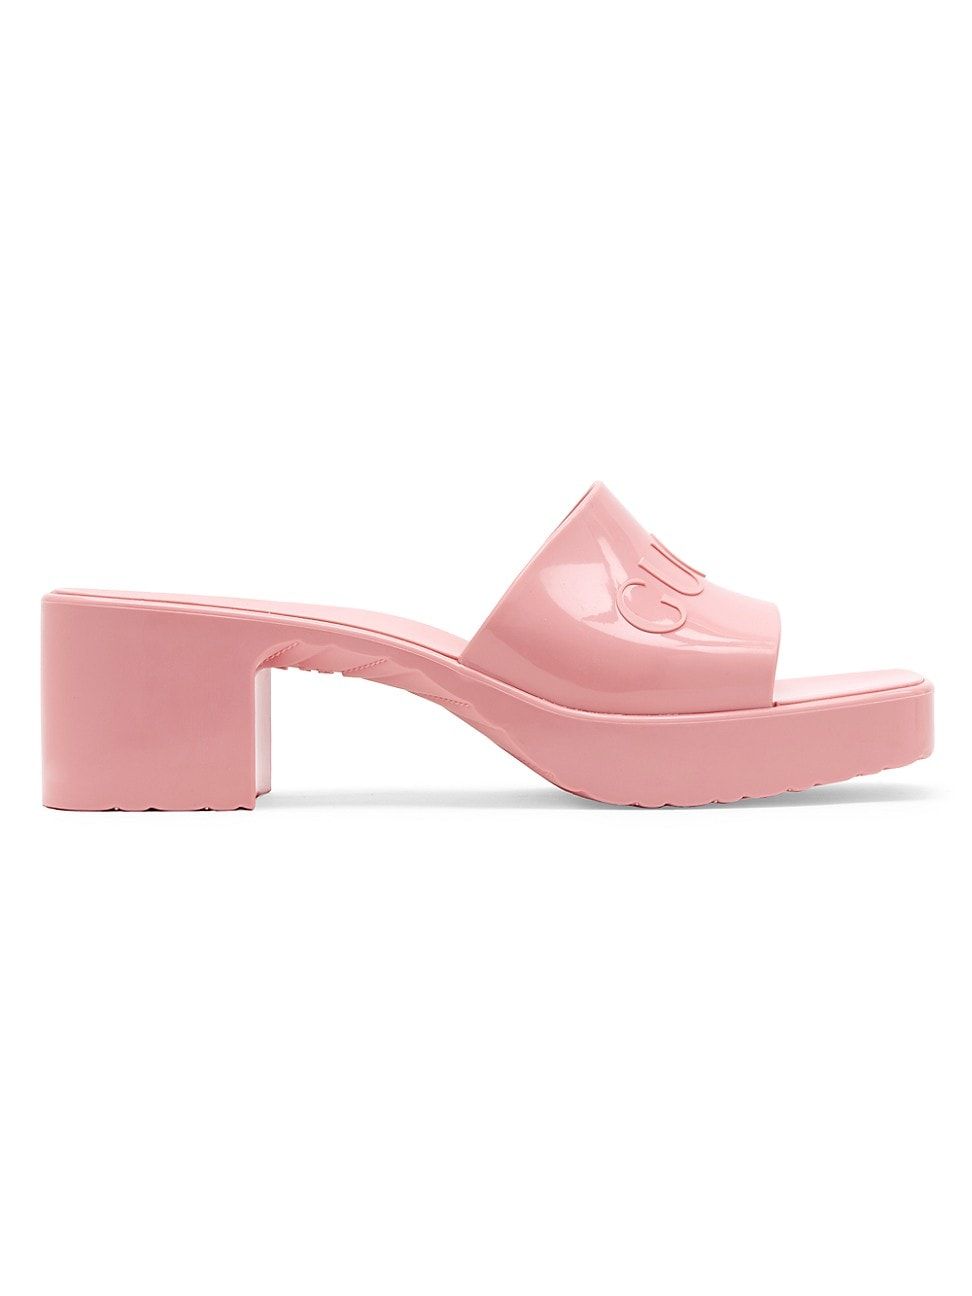 Gucci Women's Women's Rubber Slide Sandals - Wild Rose - Size 9 | Saks Fifth Avenue